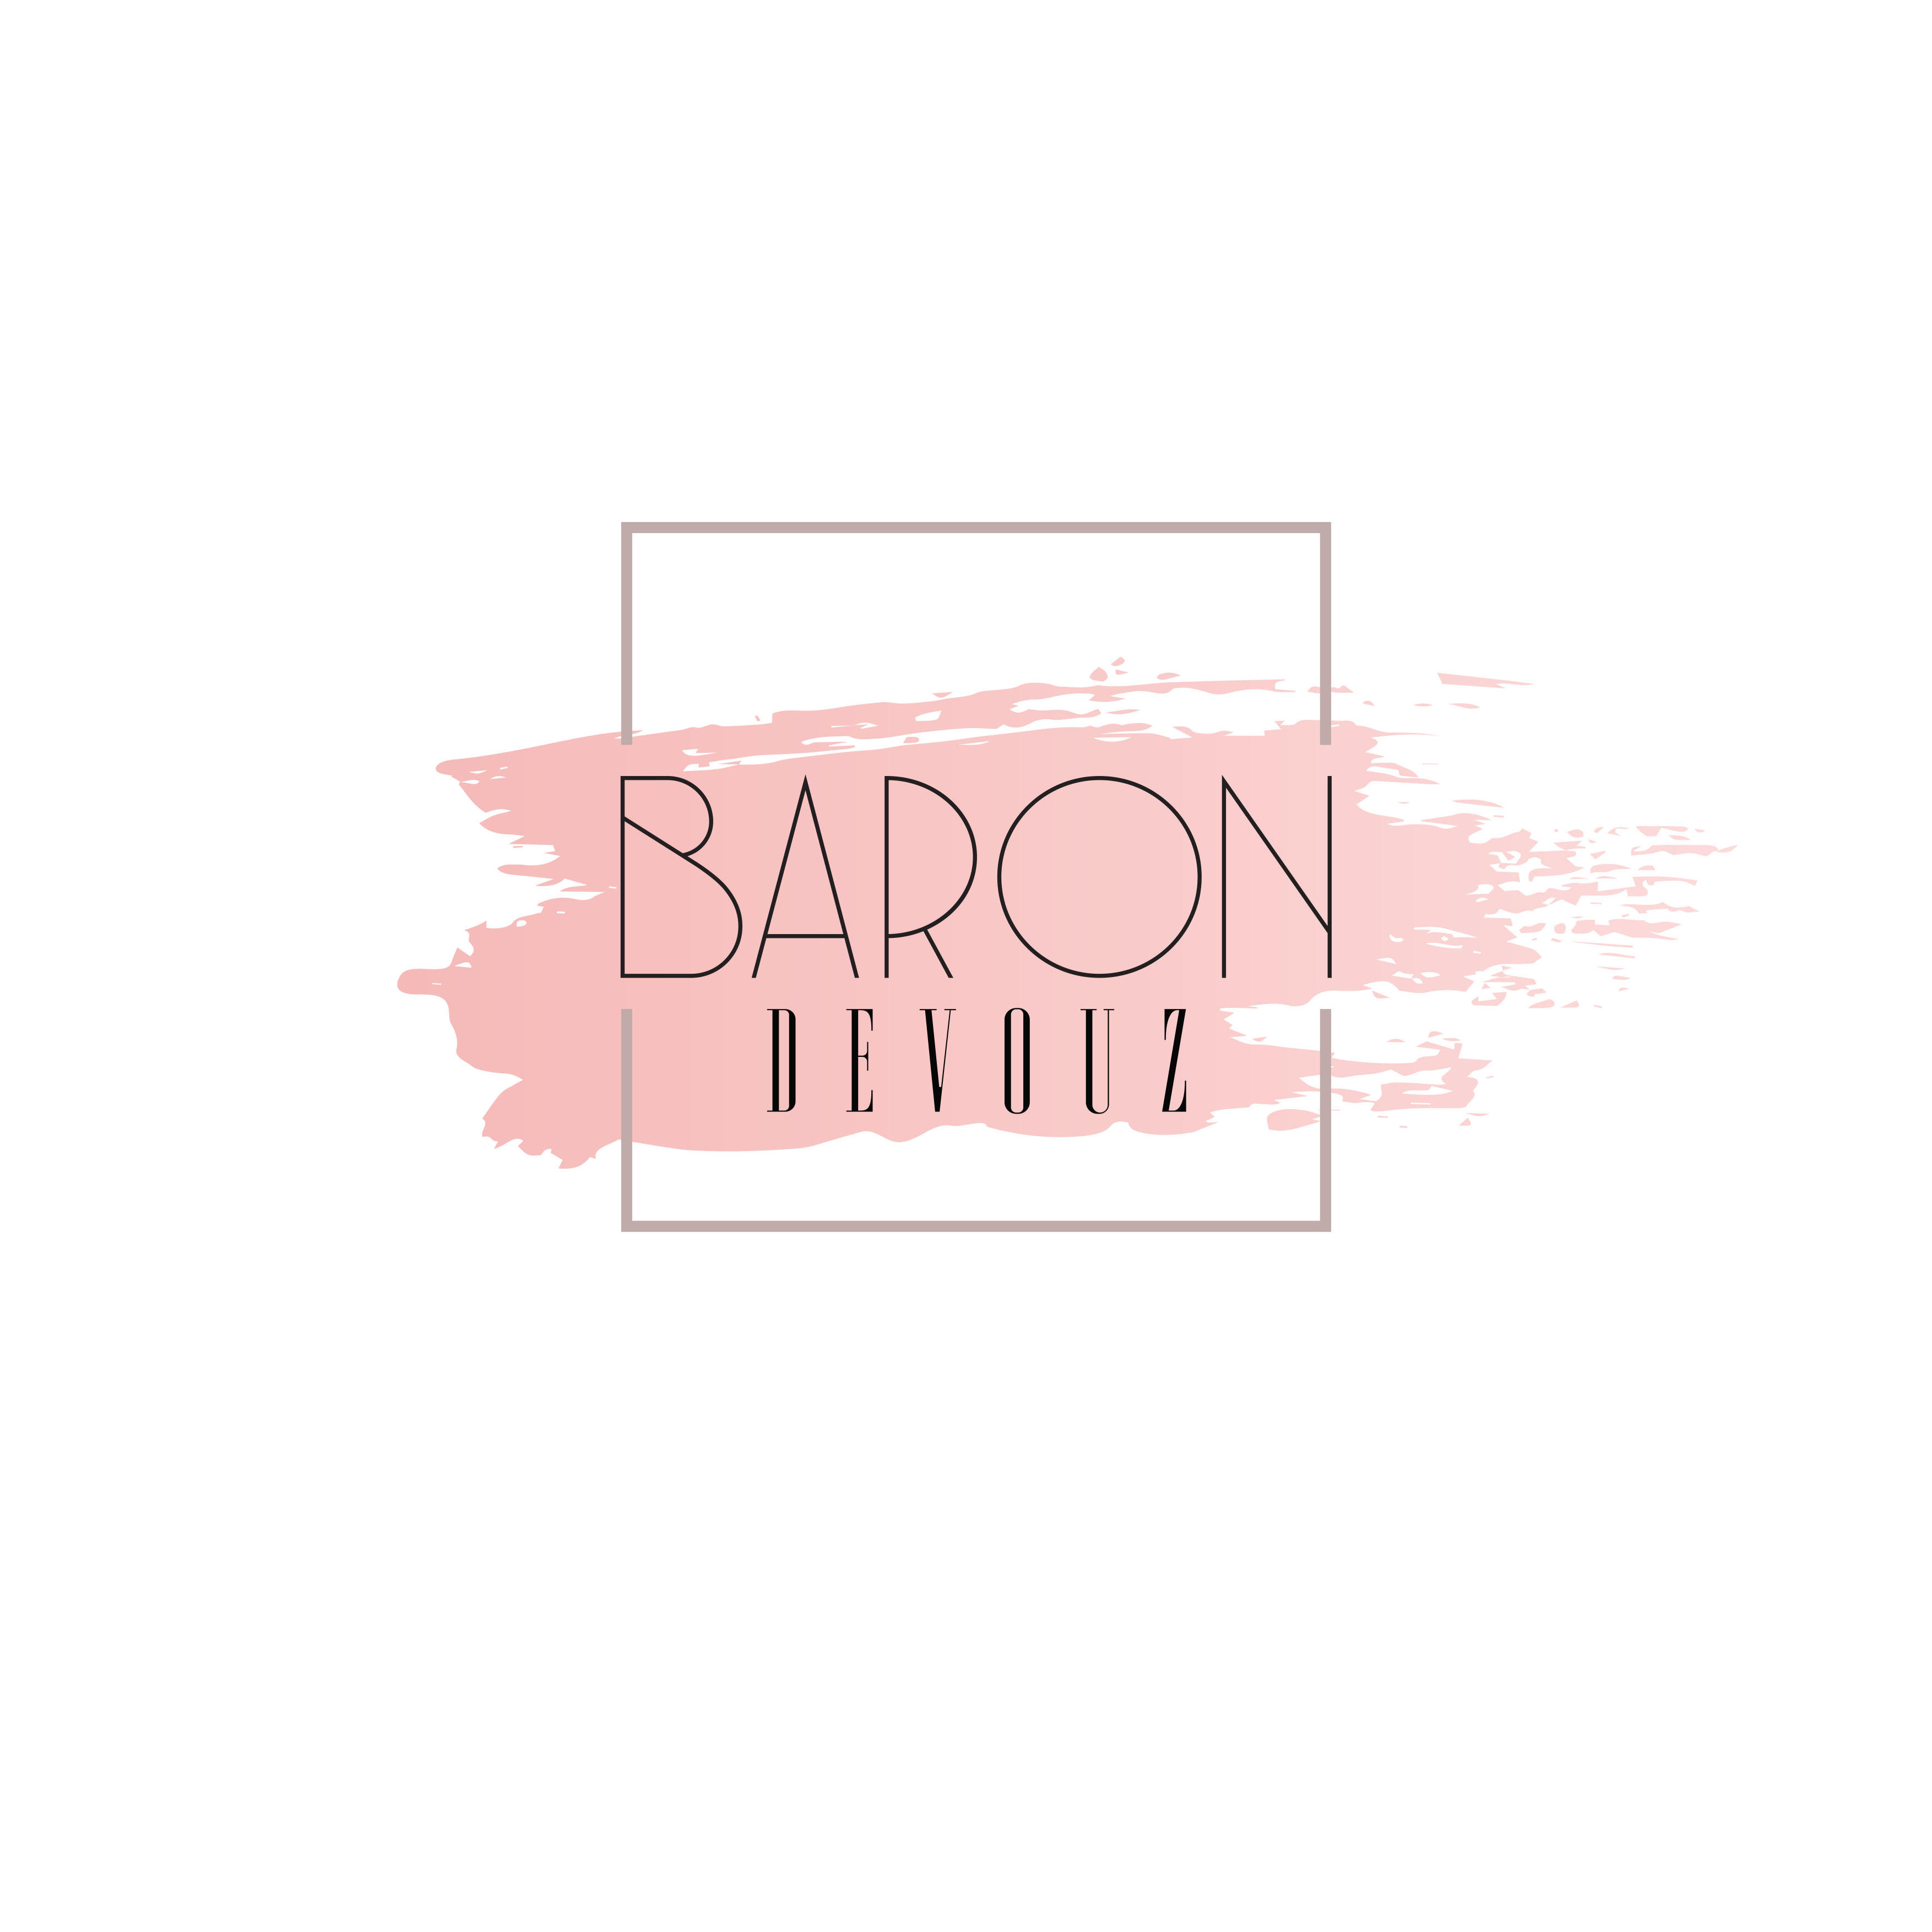 Coiffeur Baron Devouz Logo